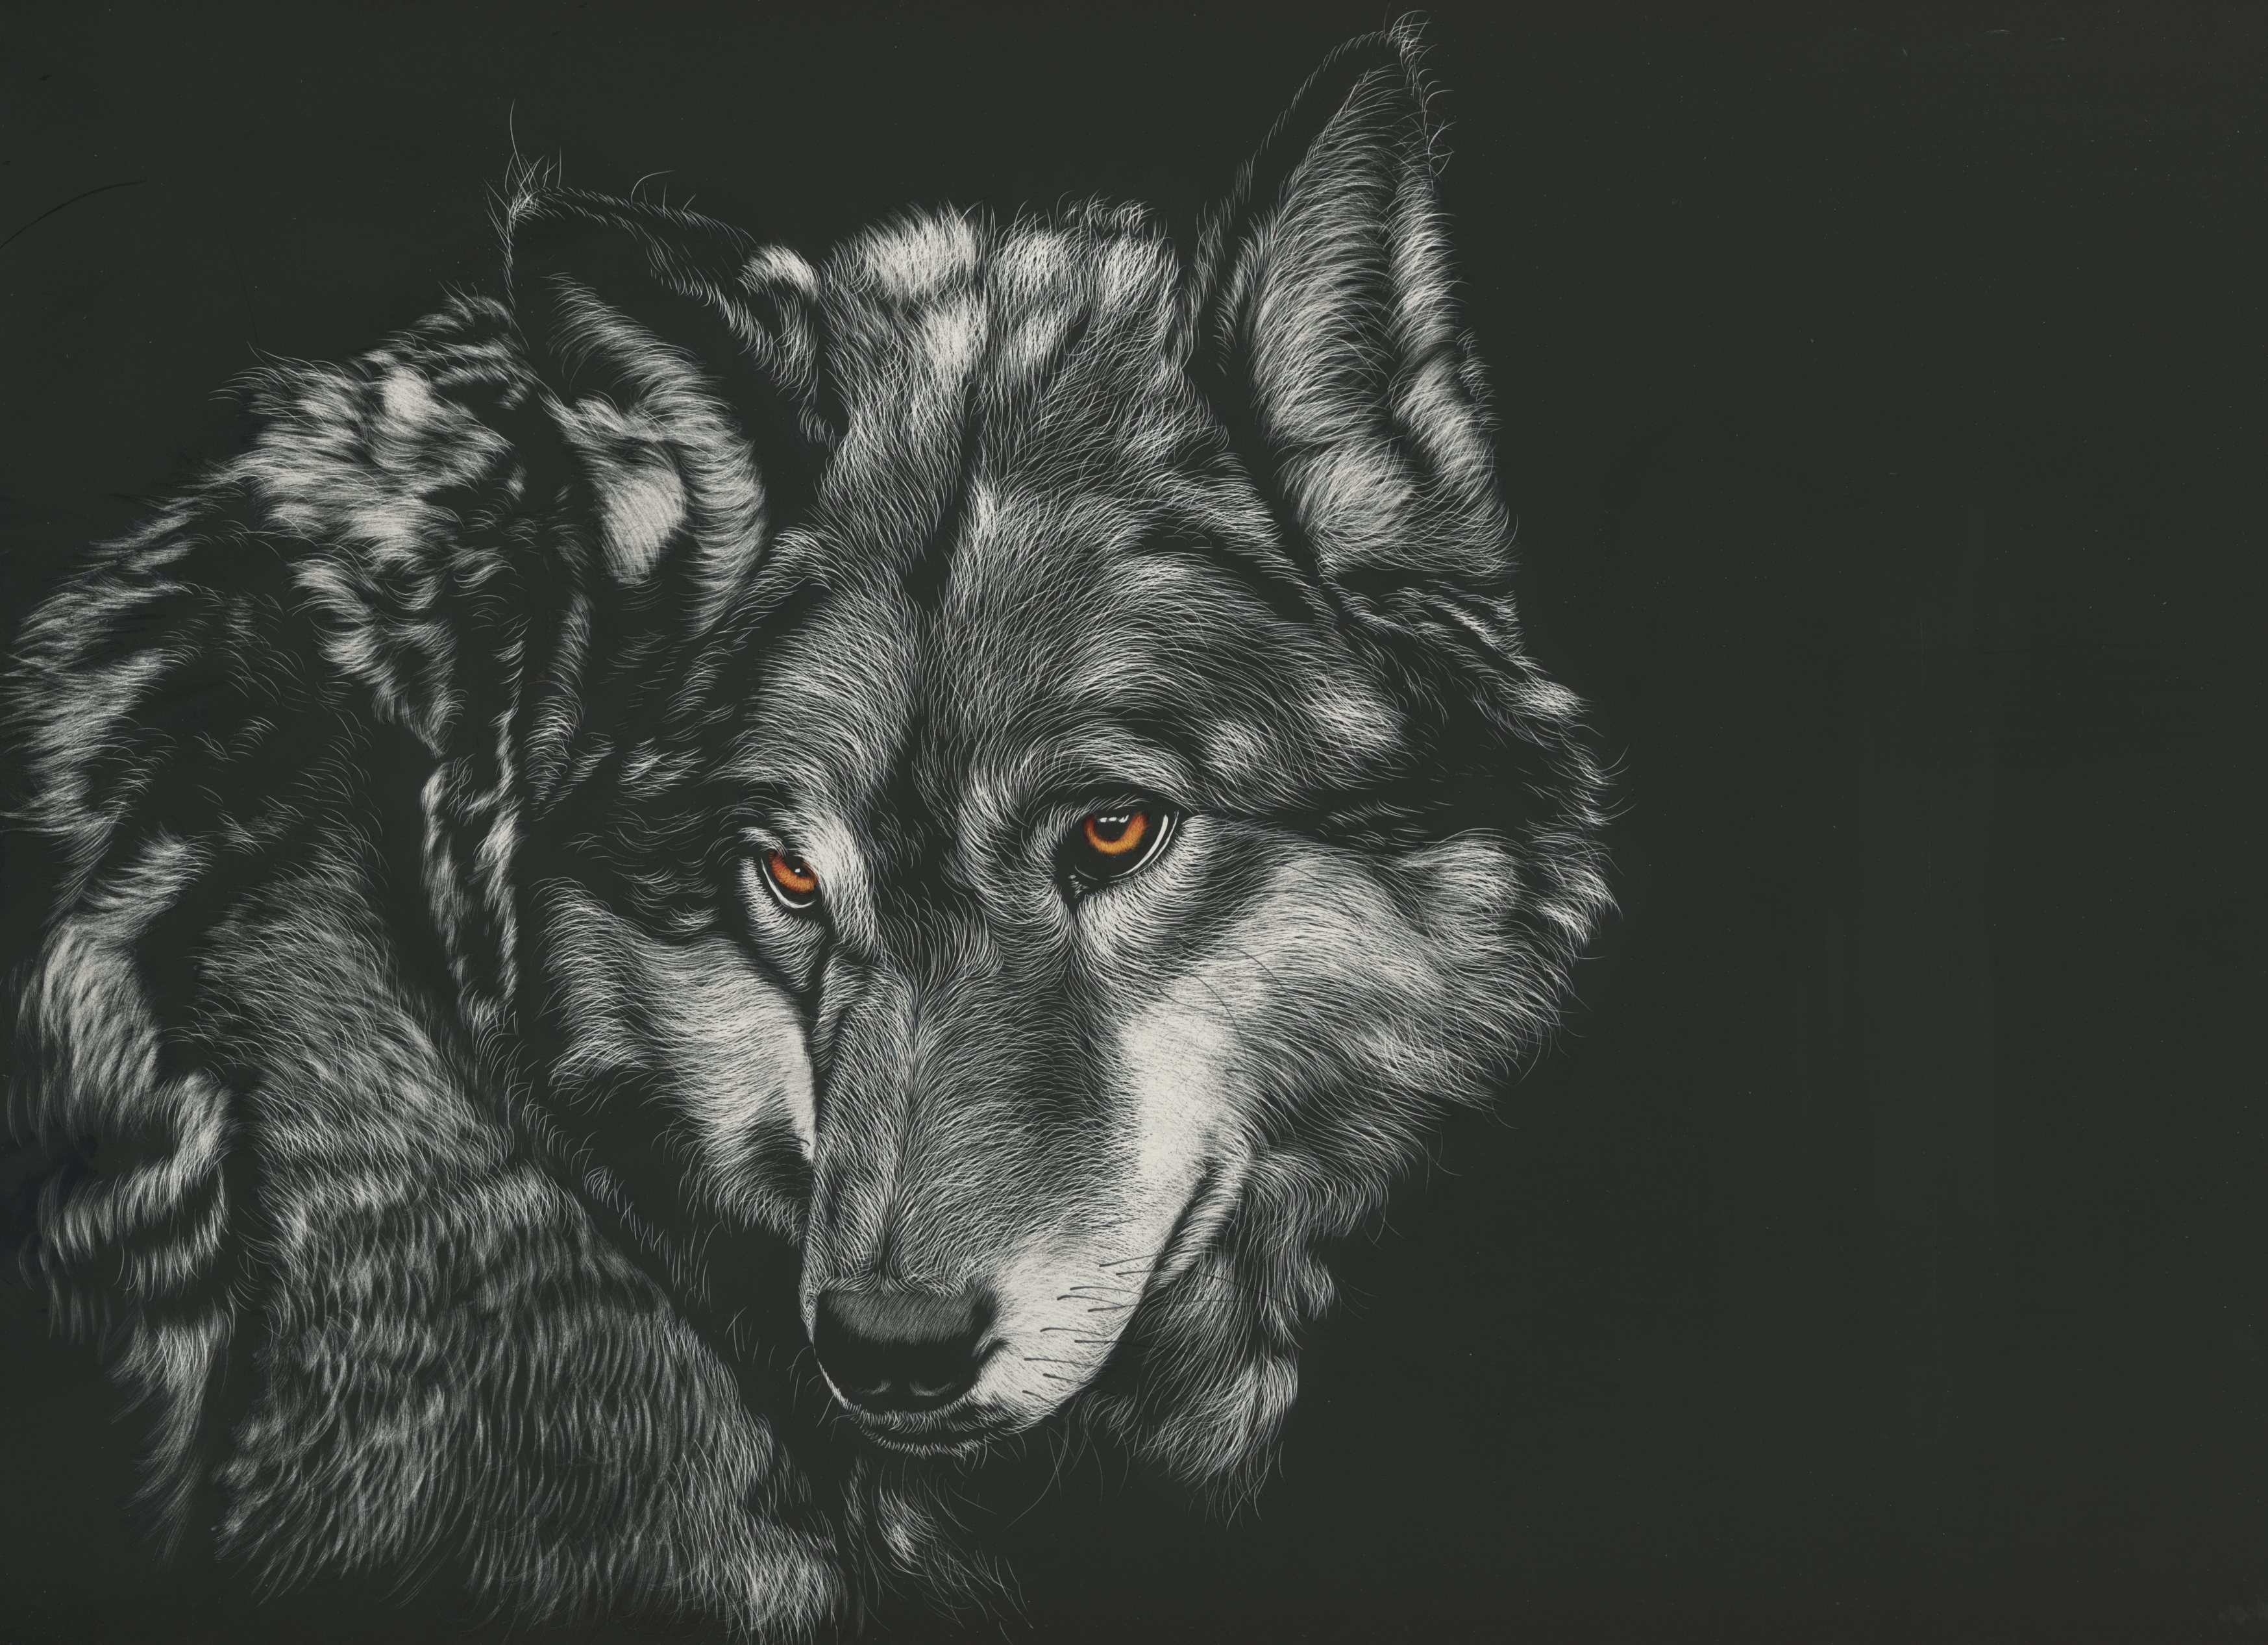 baixar壁紙hd,狼,野生動物,お絵かき,狼犬,黒と白